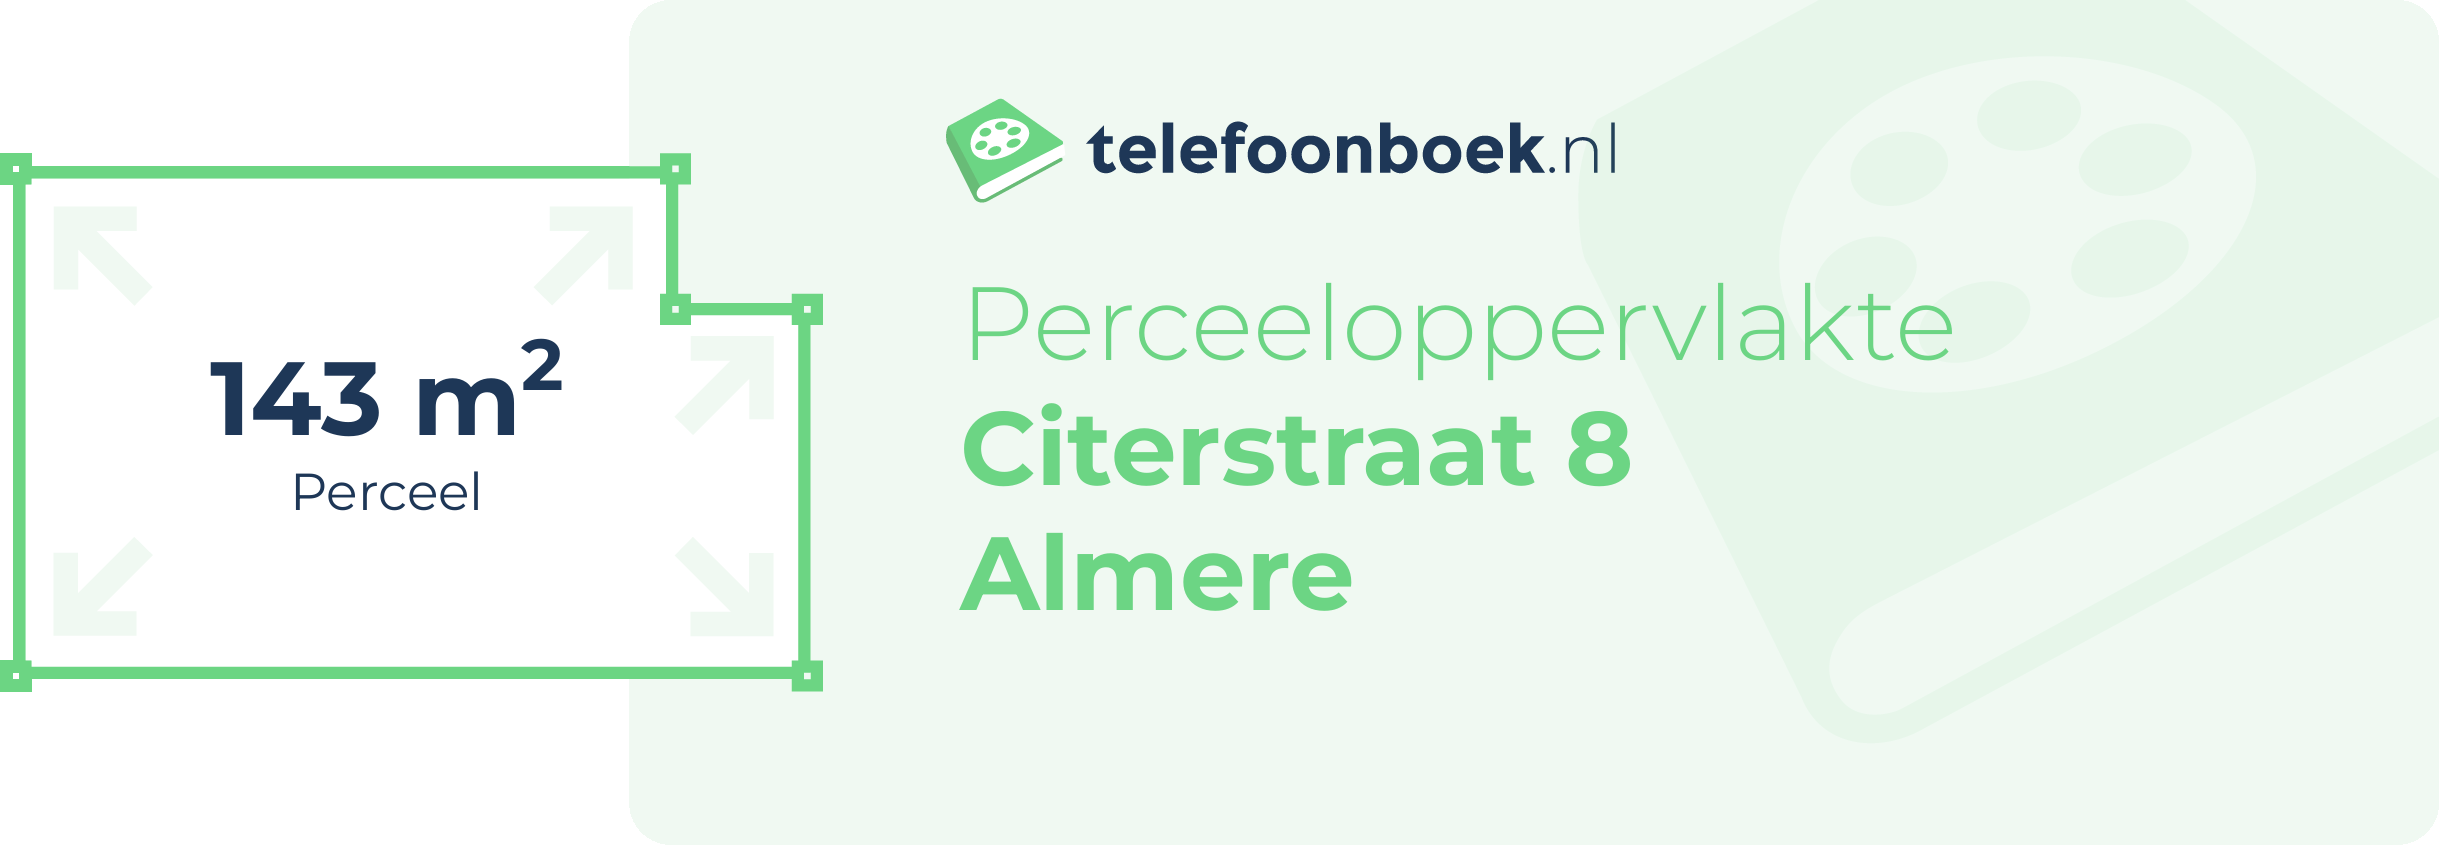 Perceeloppervlakte Citerstraat 8 Almere